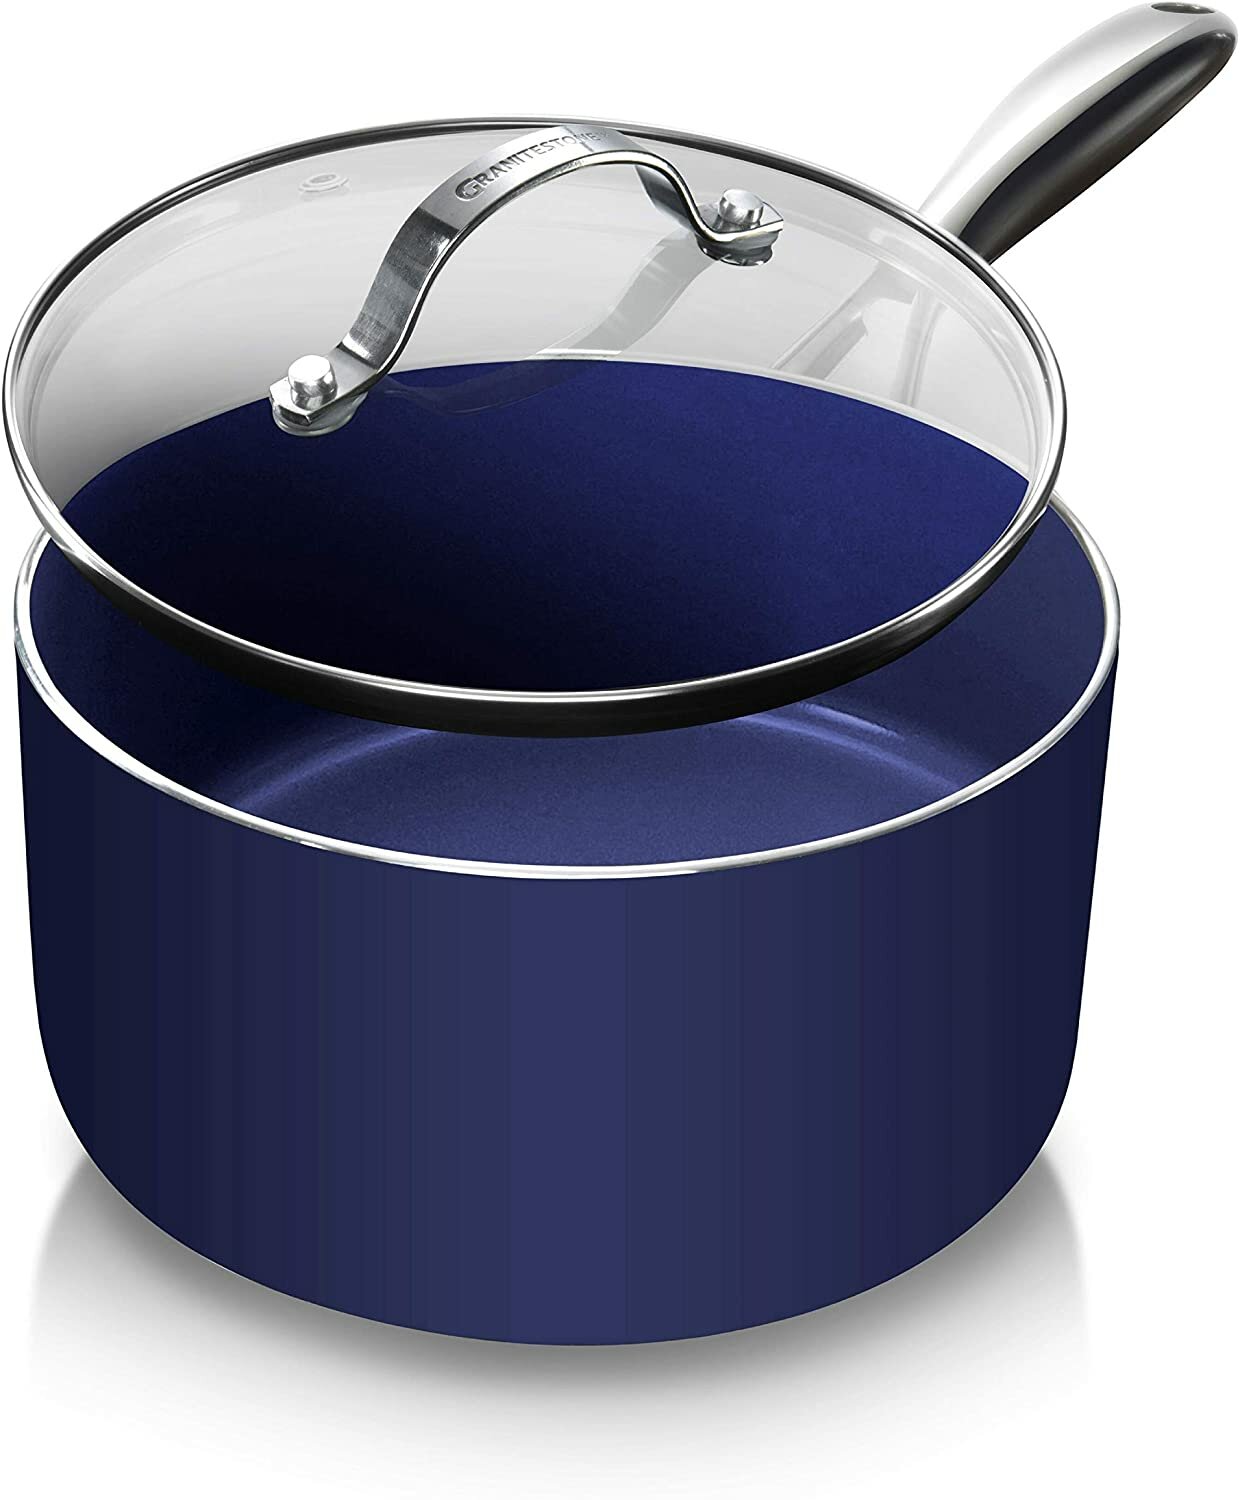 Granite Stone Blue 5 Piece Cookware Set, Ultra Non-Stick, Dishwasher Safe,  Oven Safe 